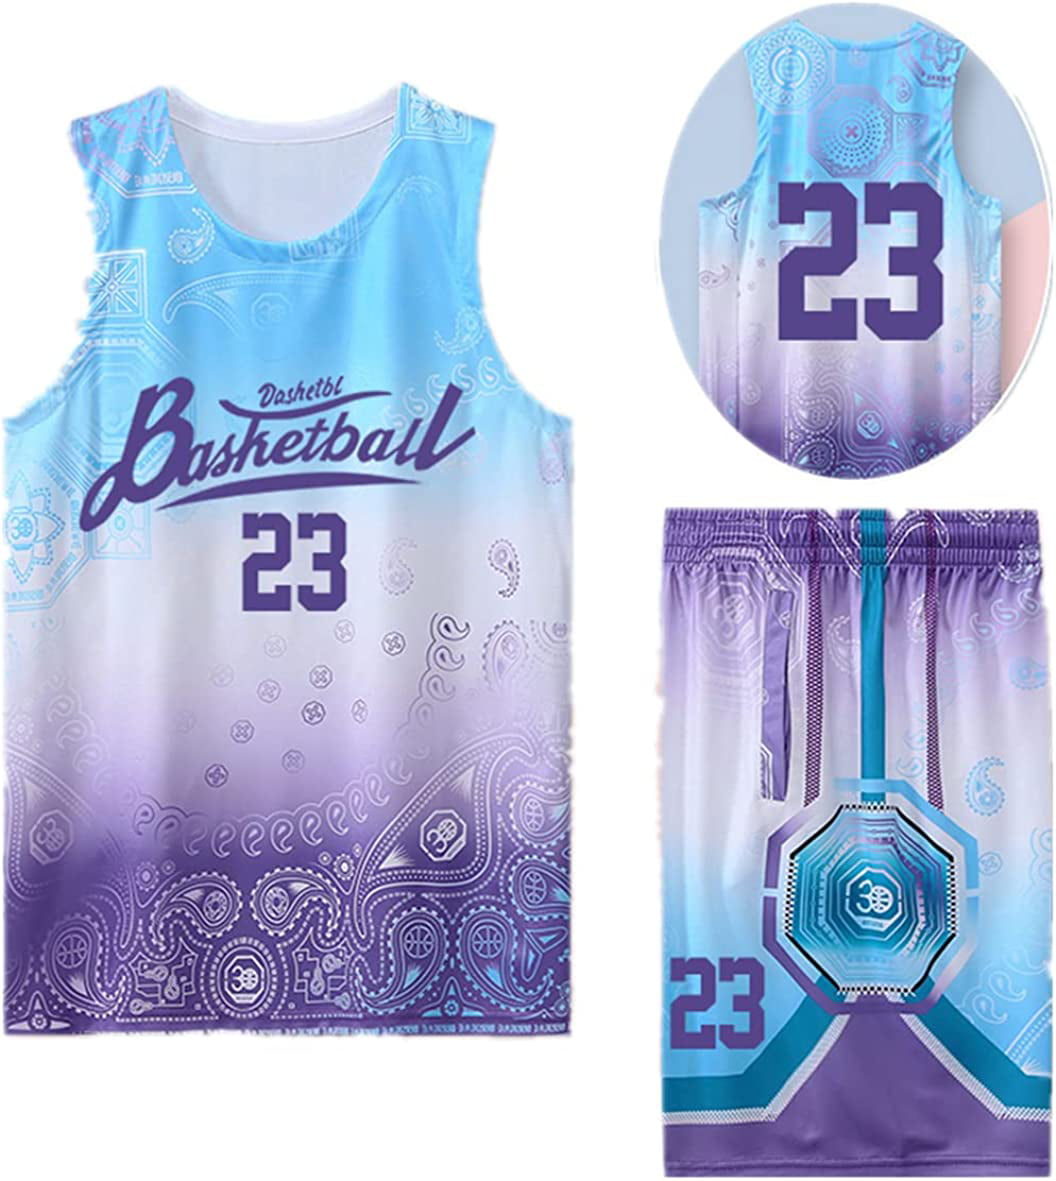 sample basketball jersey color purple, sample basketball jersey